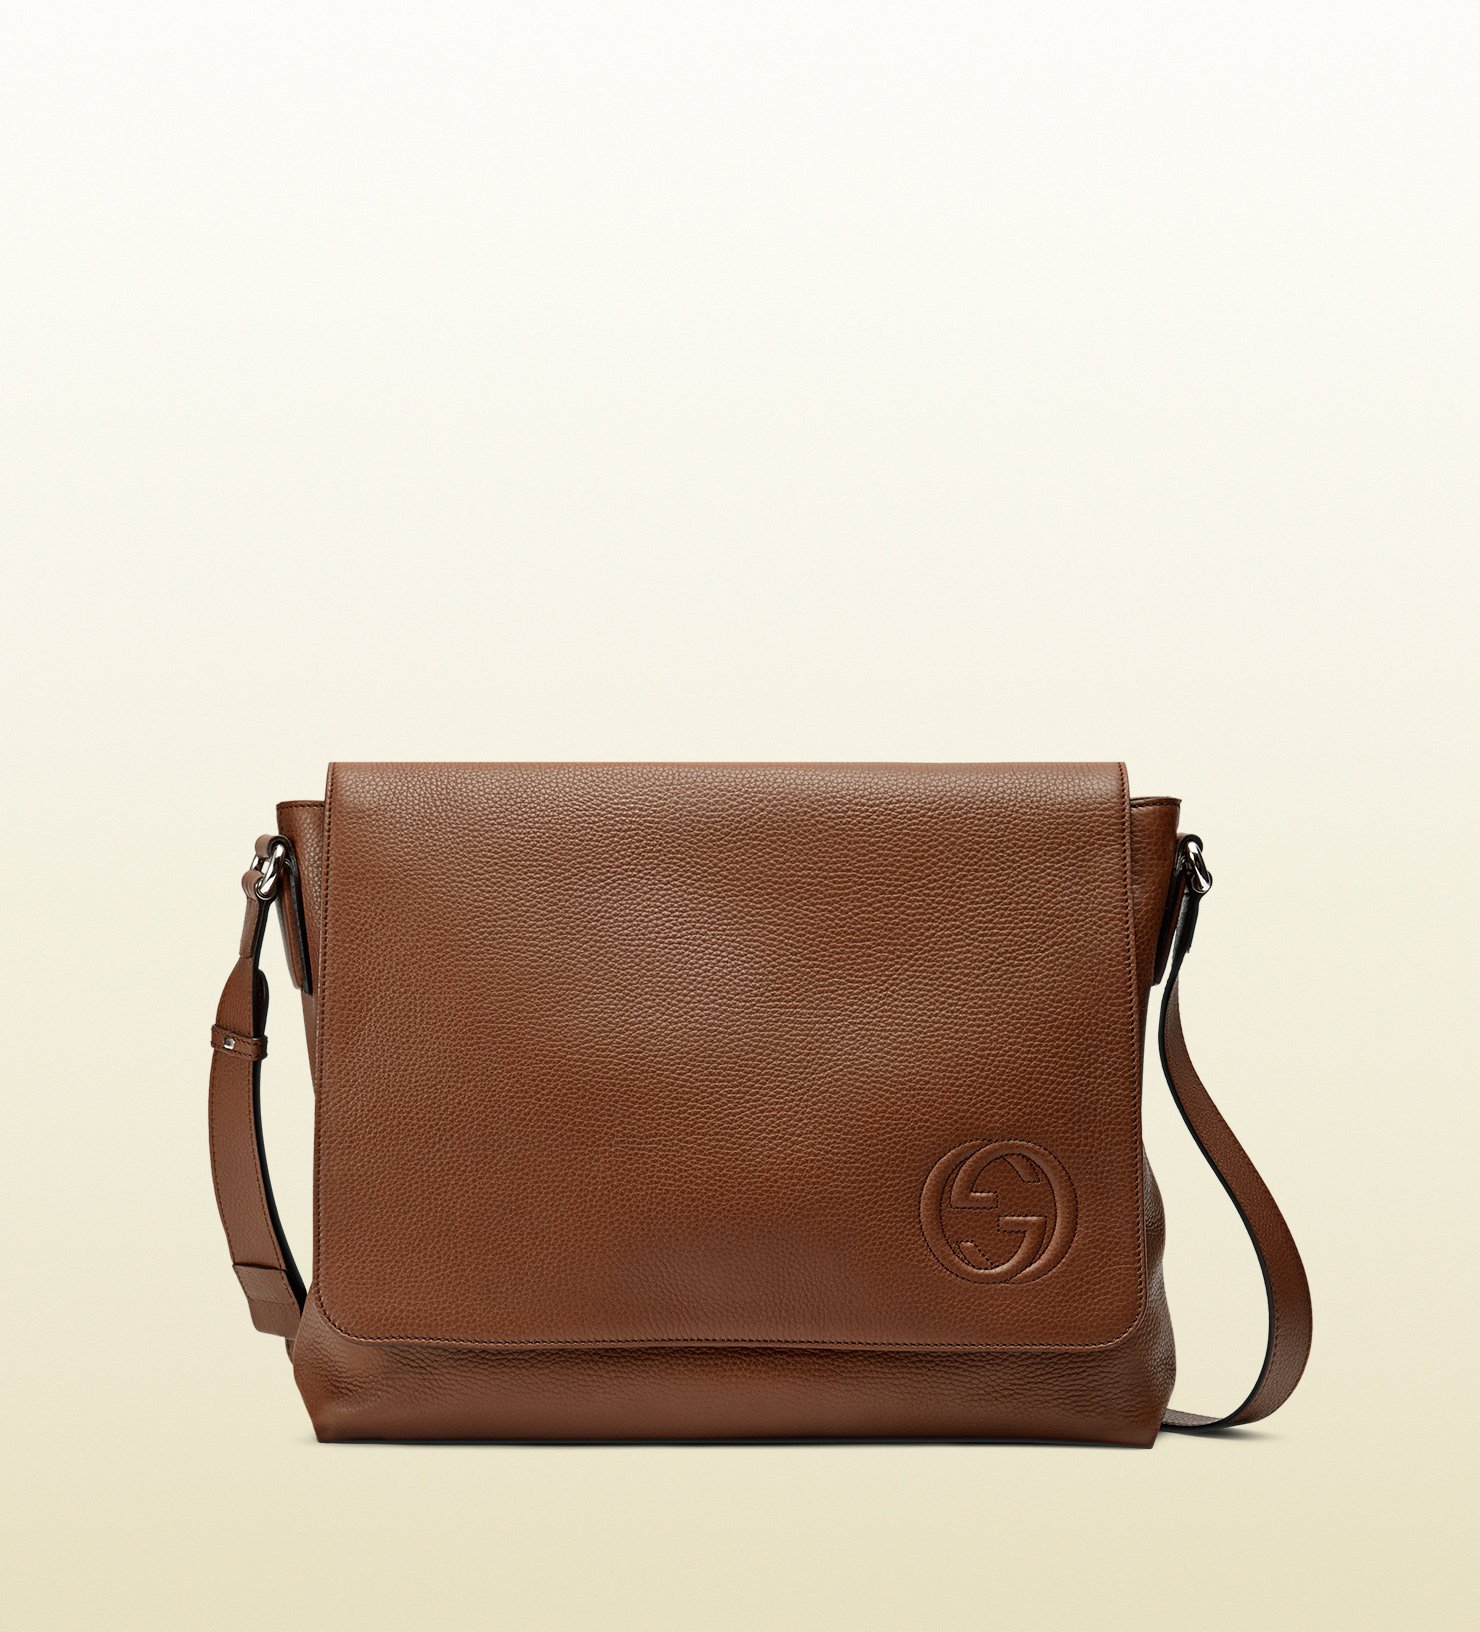 Gucci Soho Leather Messenger Bag in Brown for Men